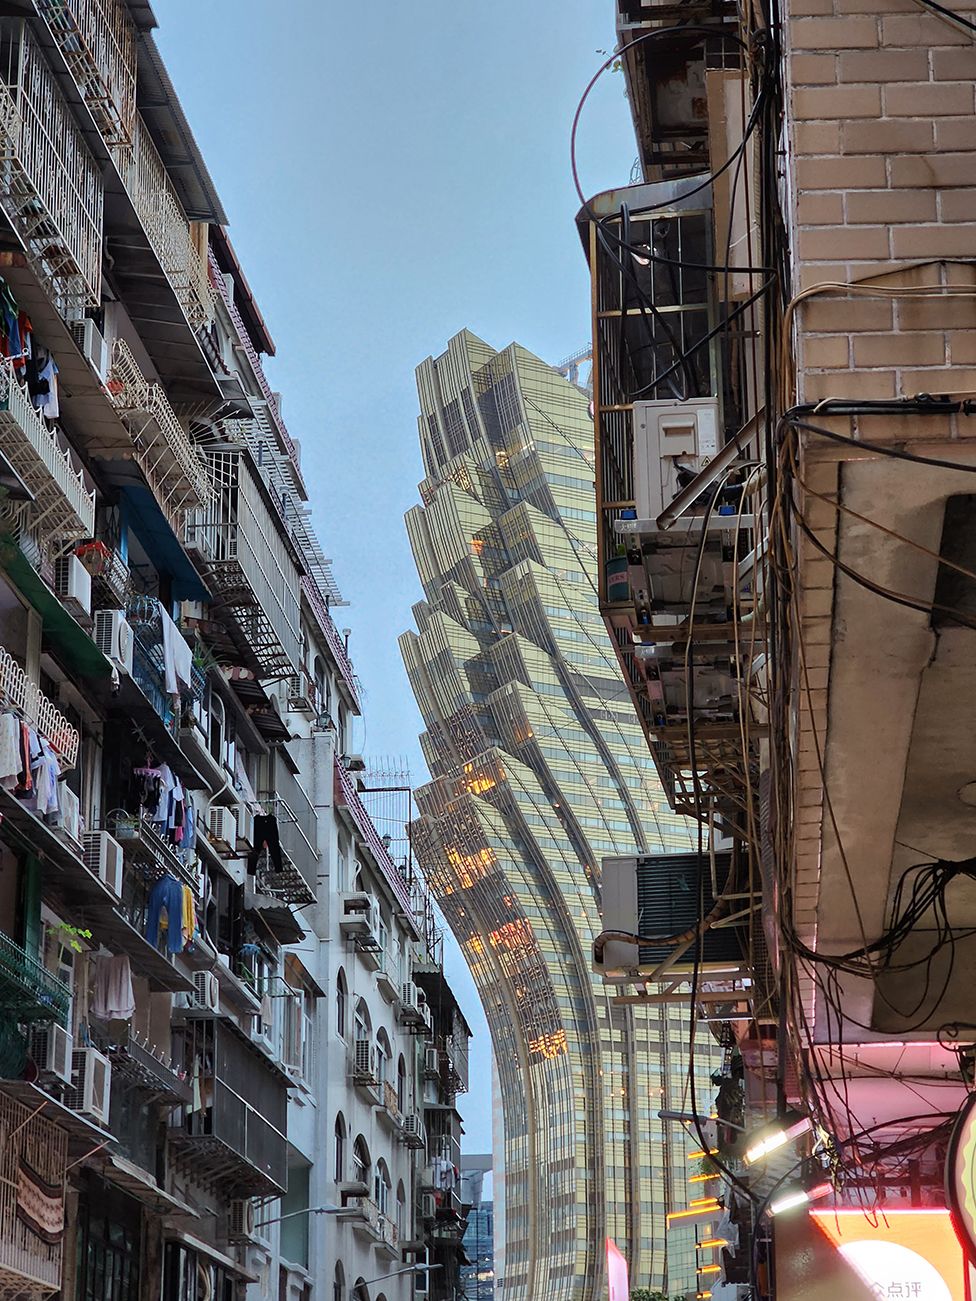 A street view in Macau city